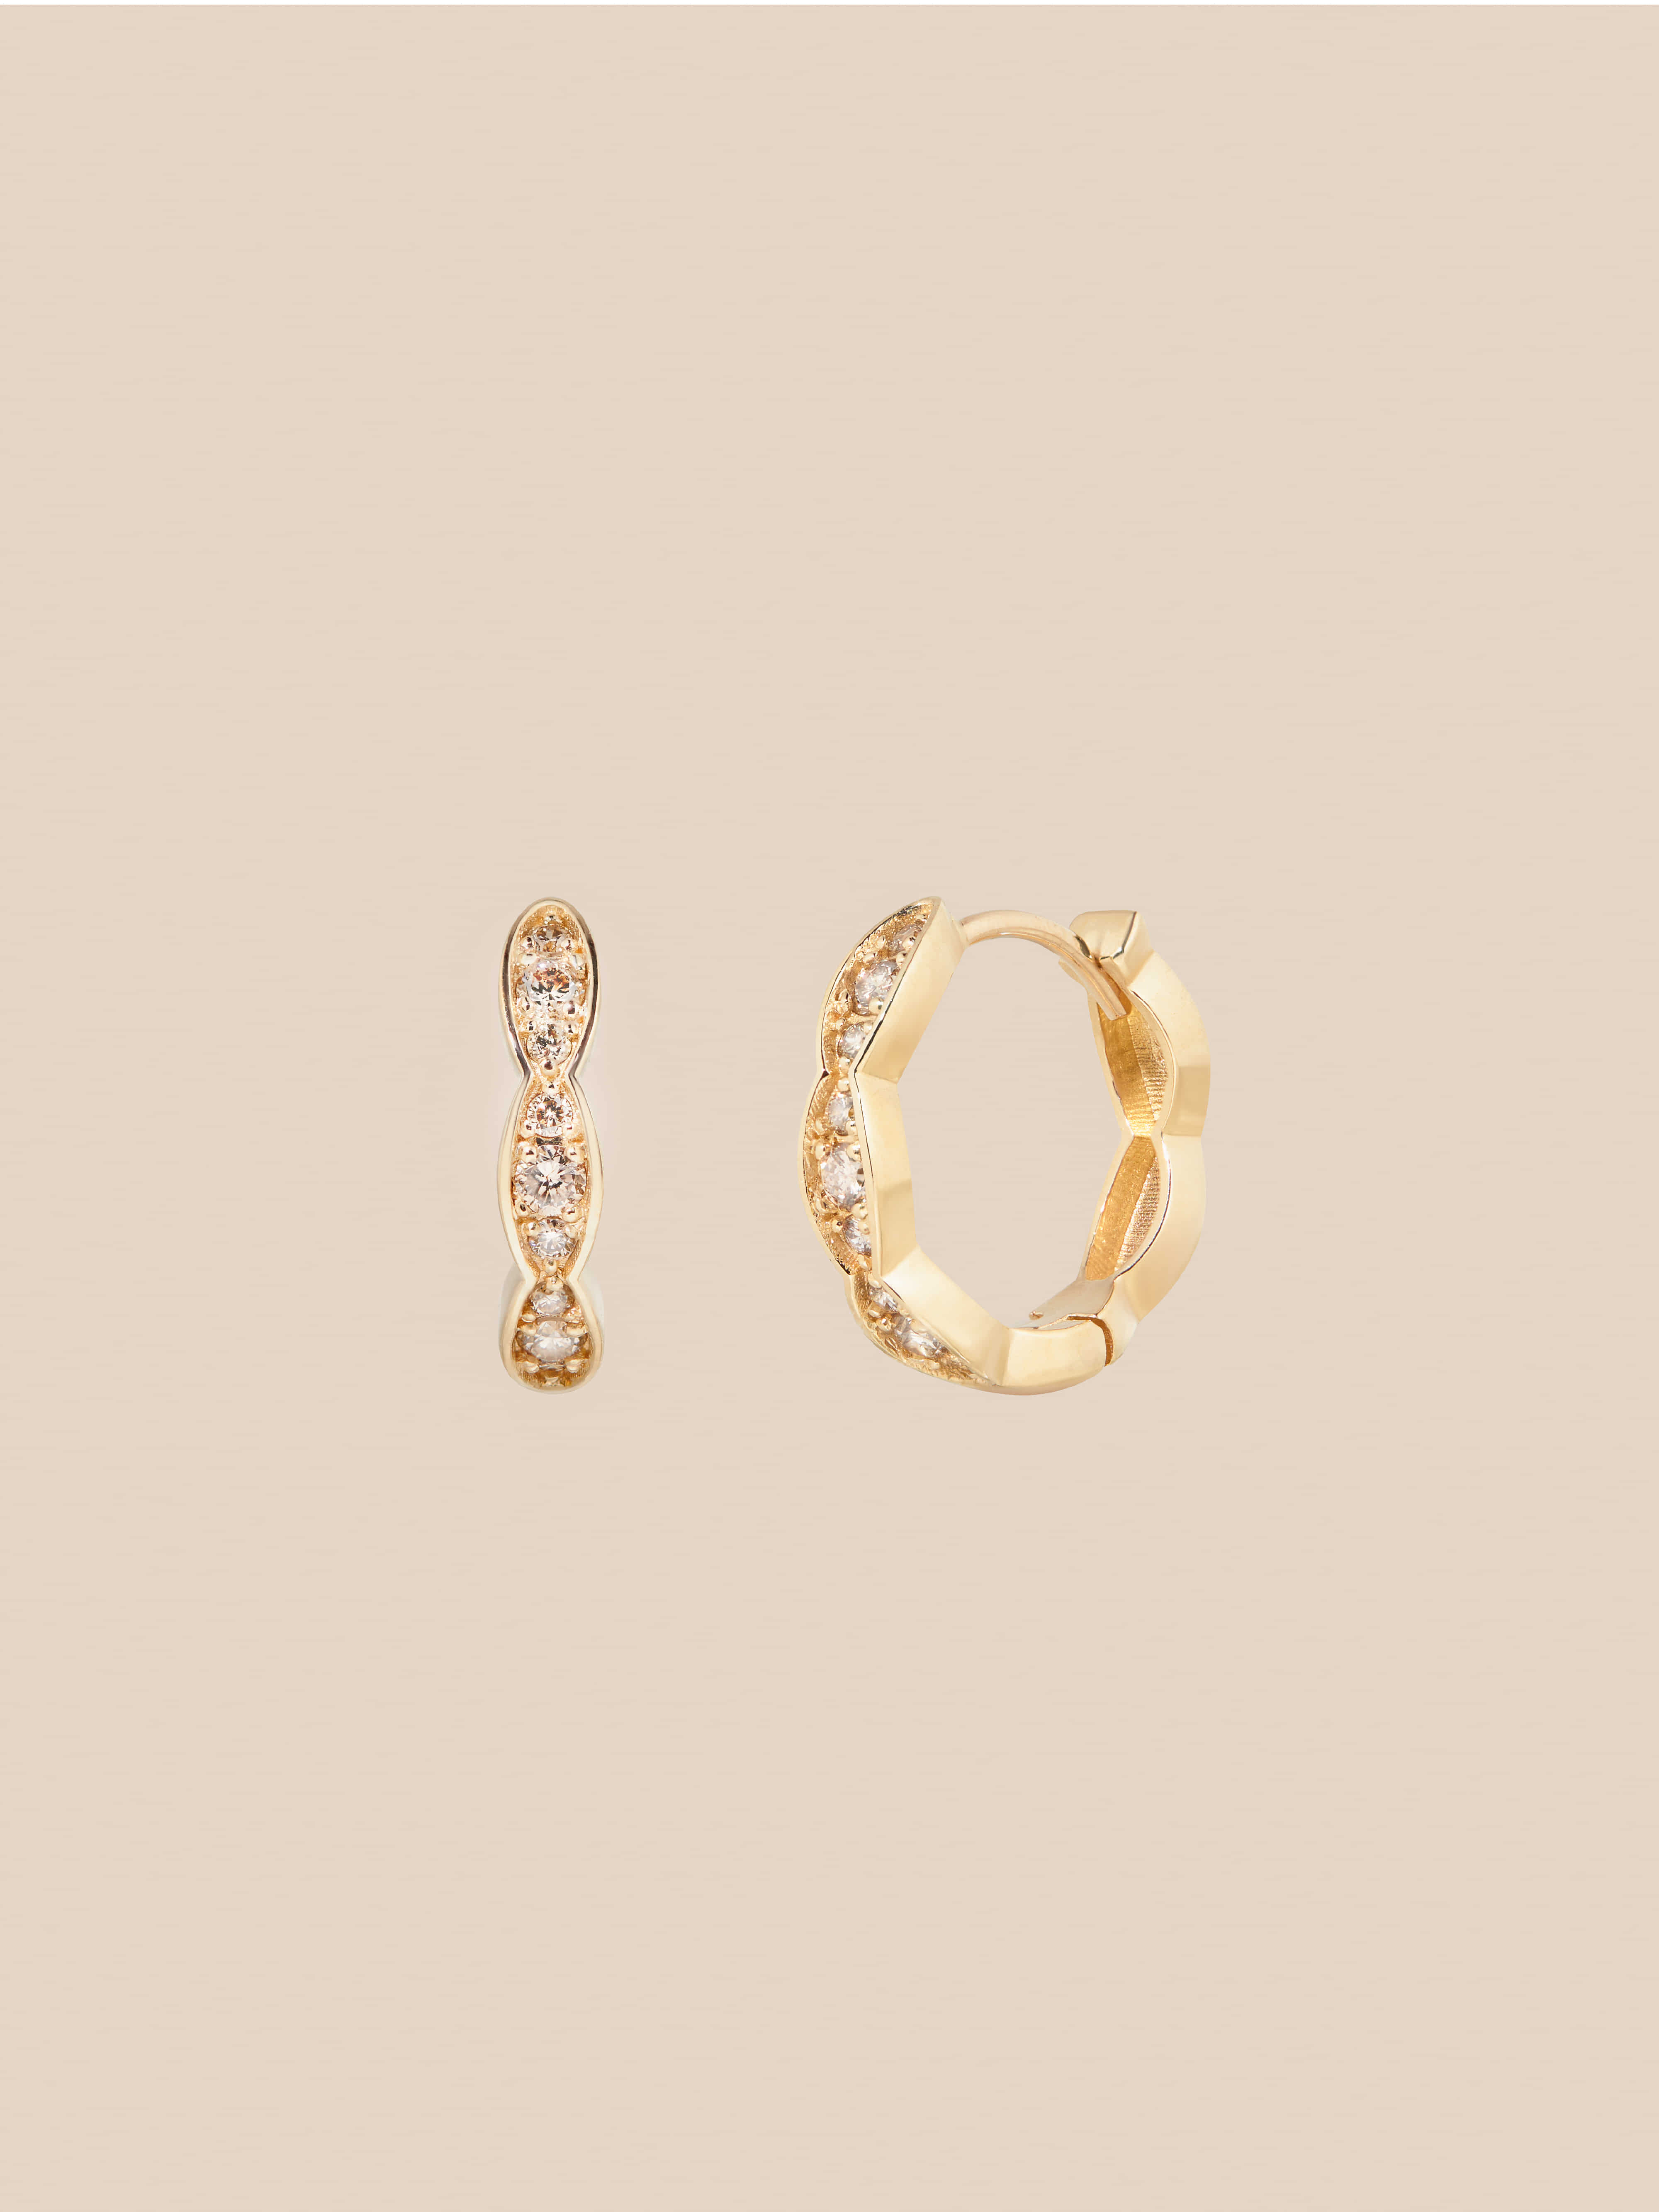 Anniversary Date Diamond Earring